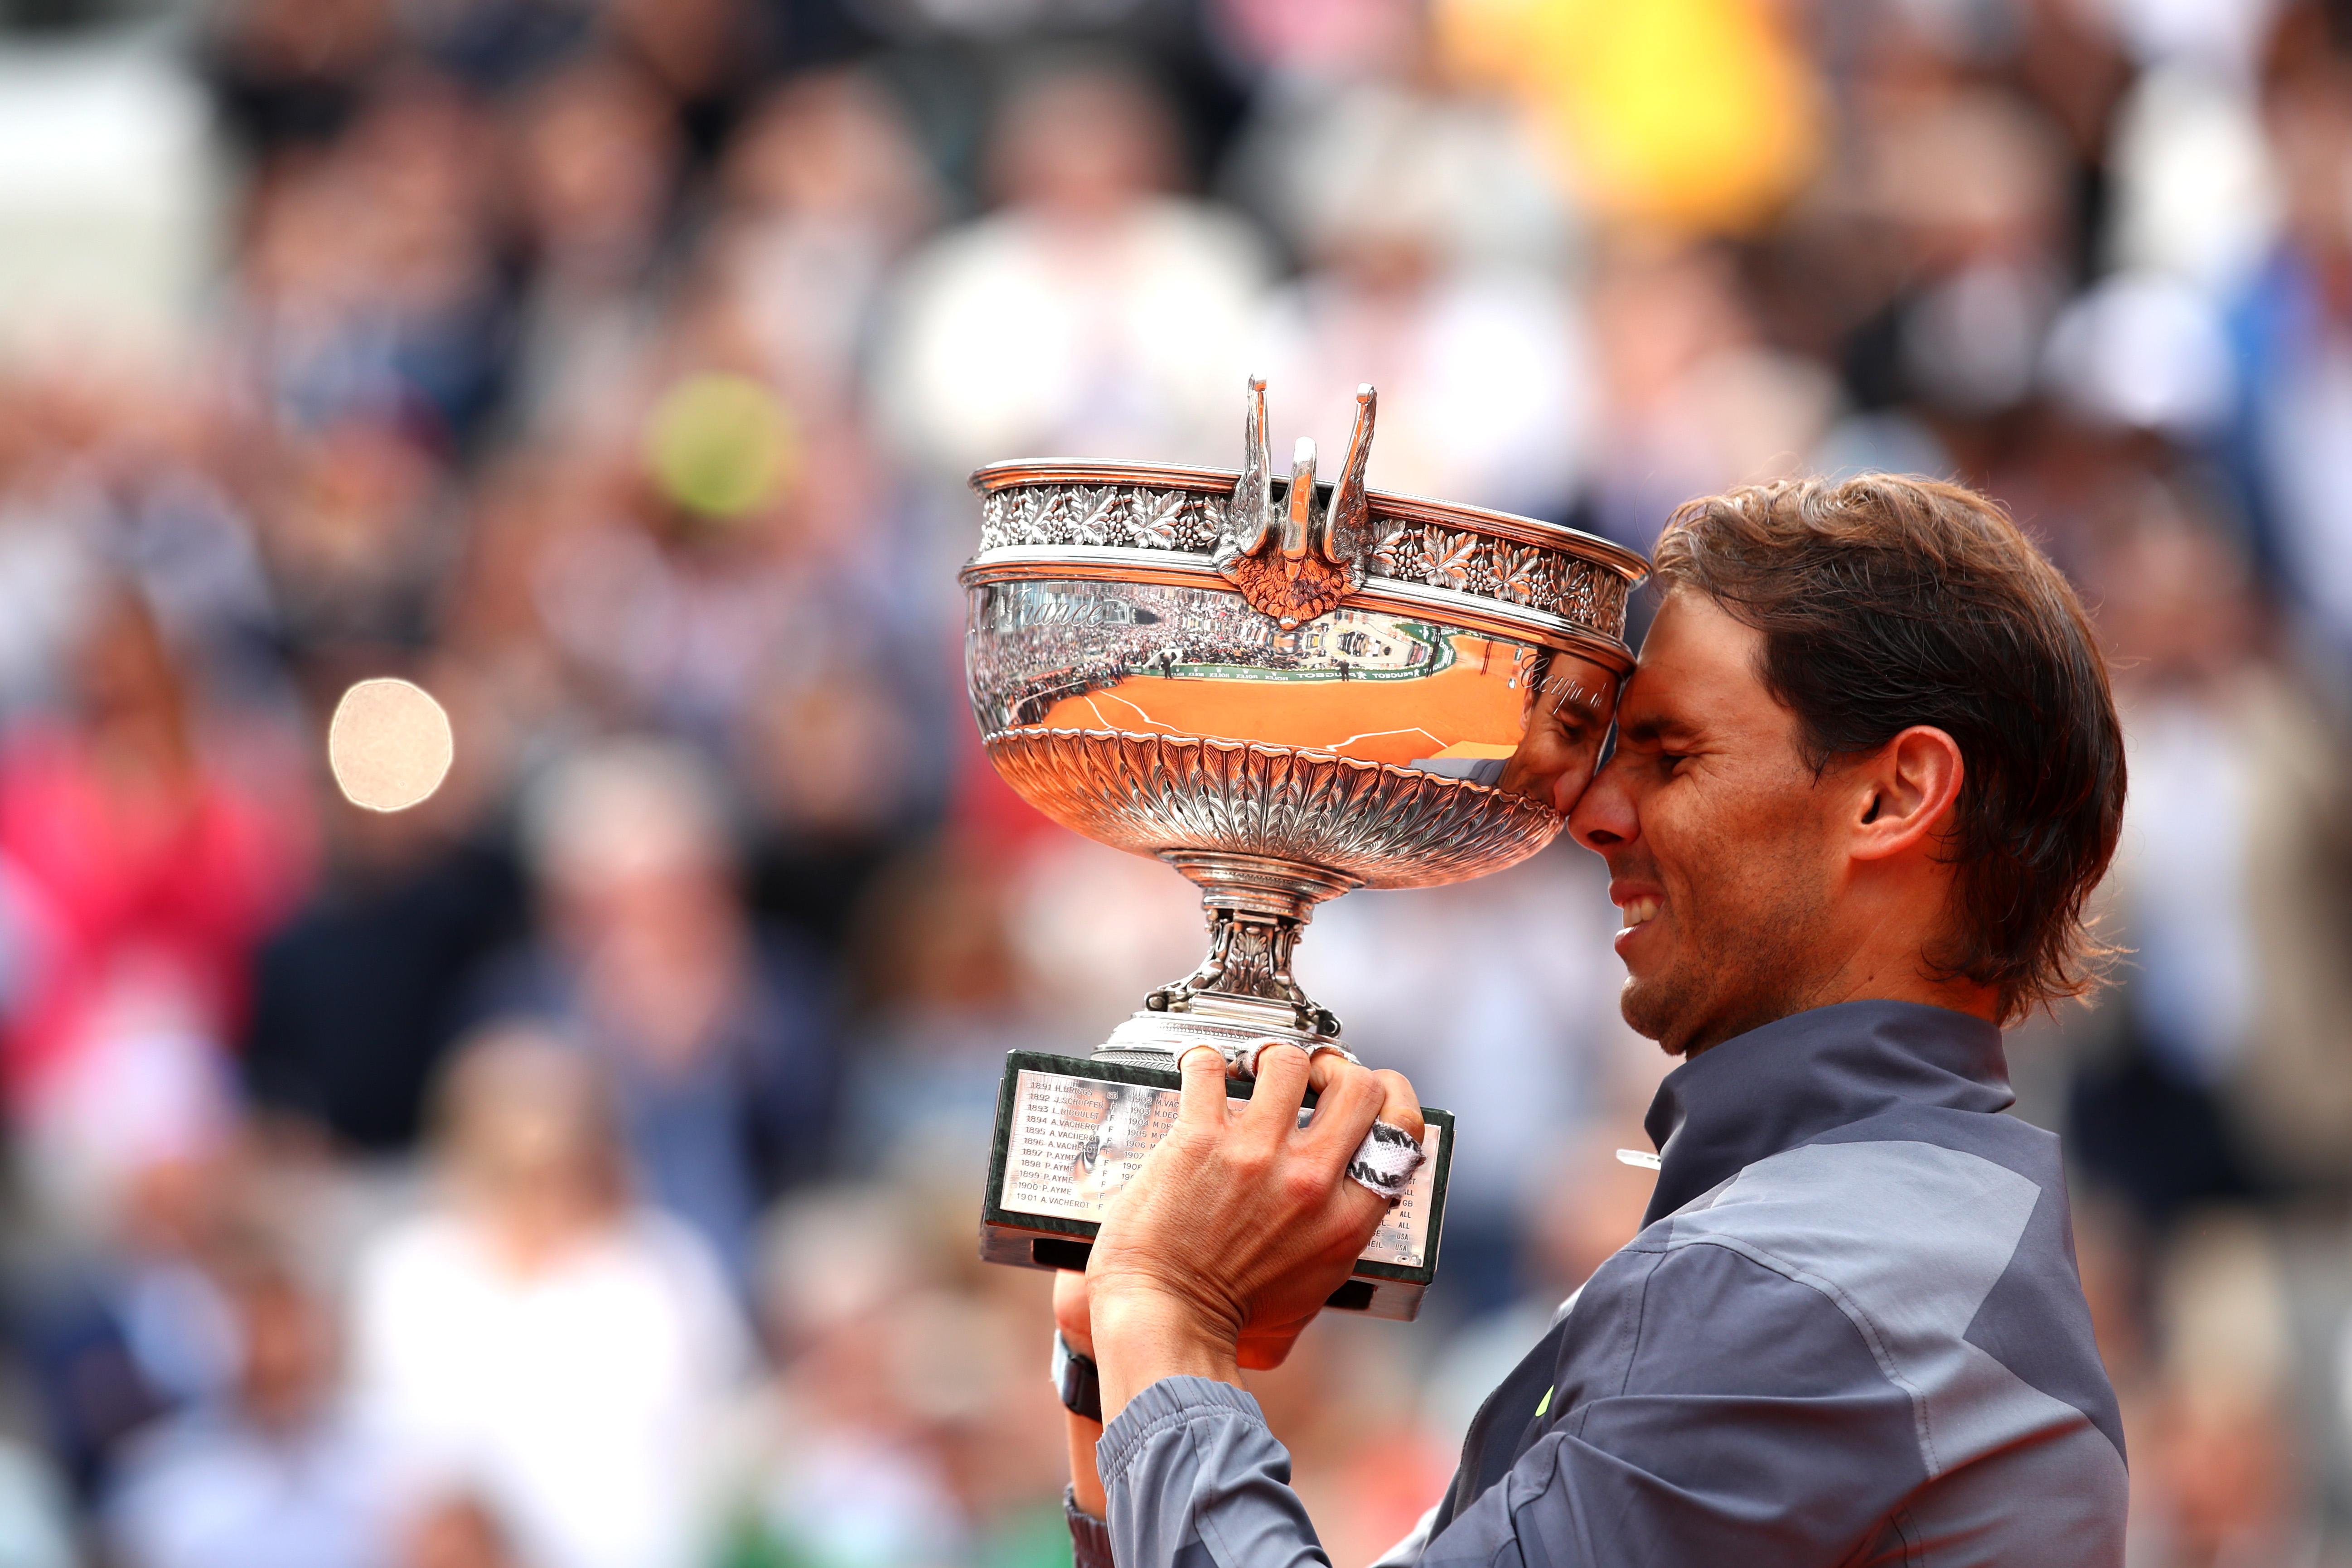 French Open: Rafael Nadal has beautiful reaction to winning 18th major